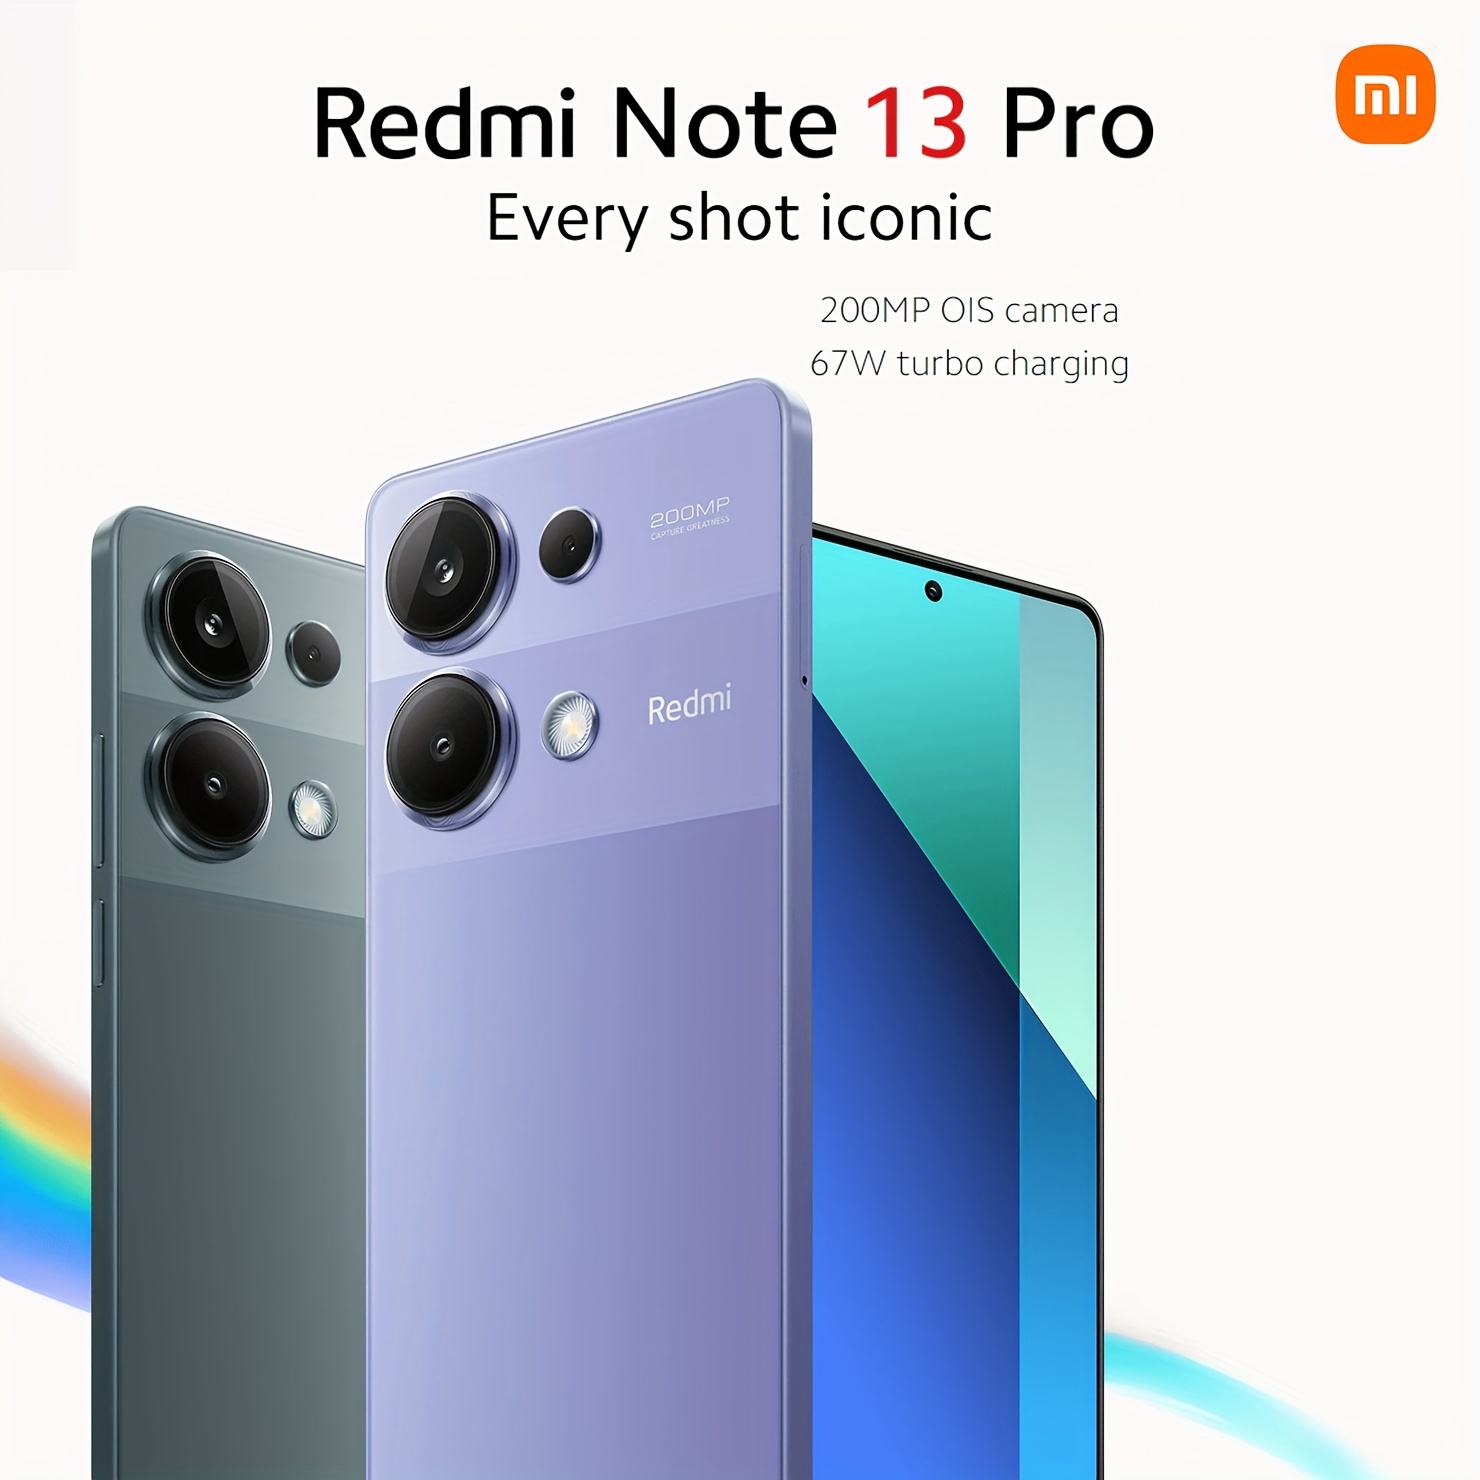 Xiaomi Redmi Note 12 5G NFC AMOLED DotDisplay 6,67 120 Hz